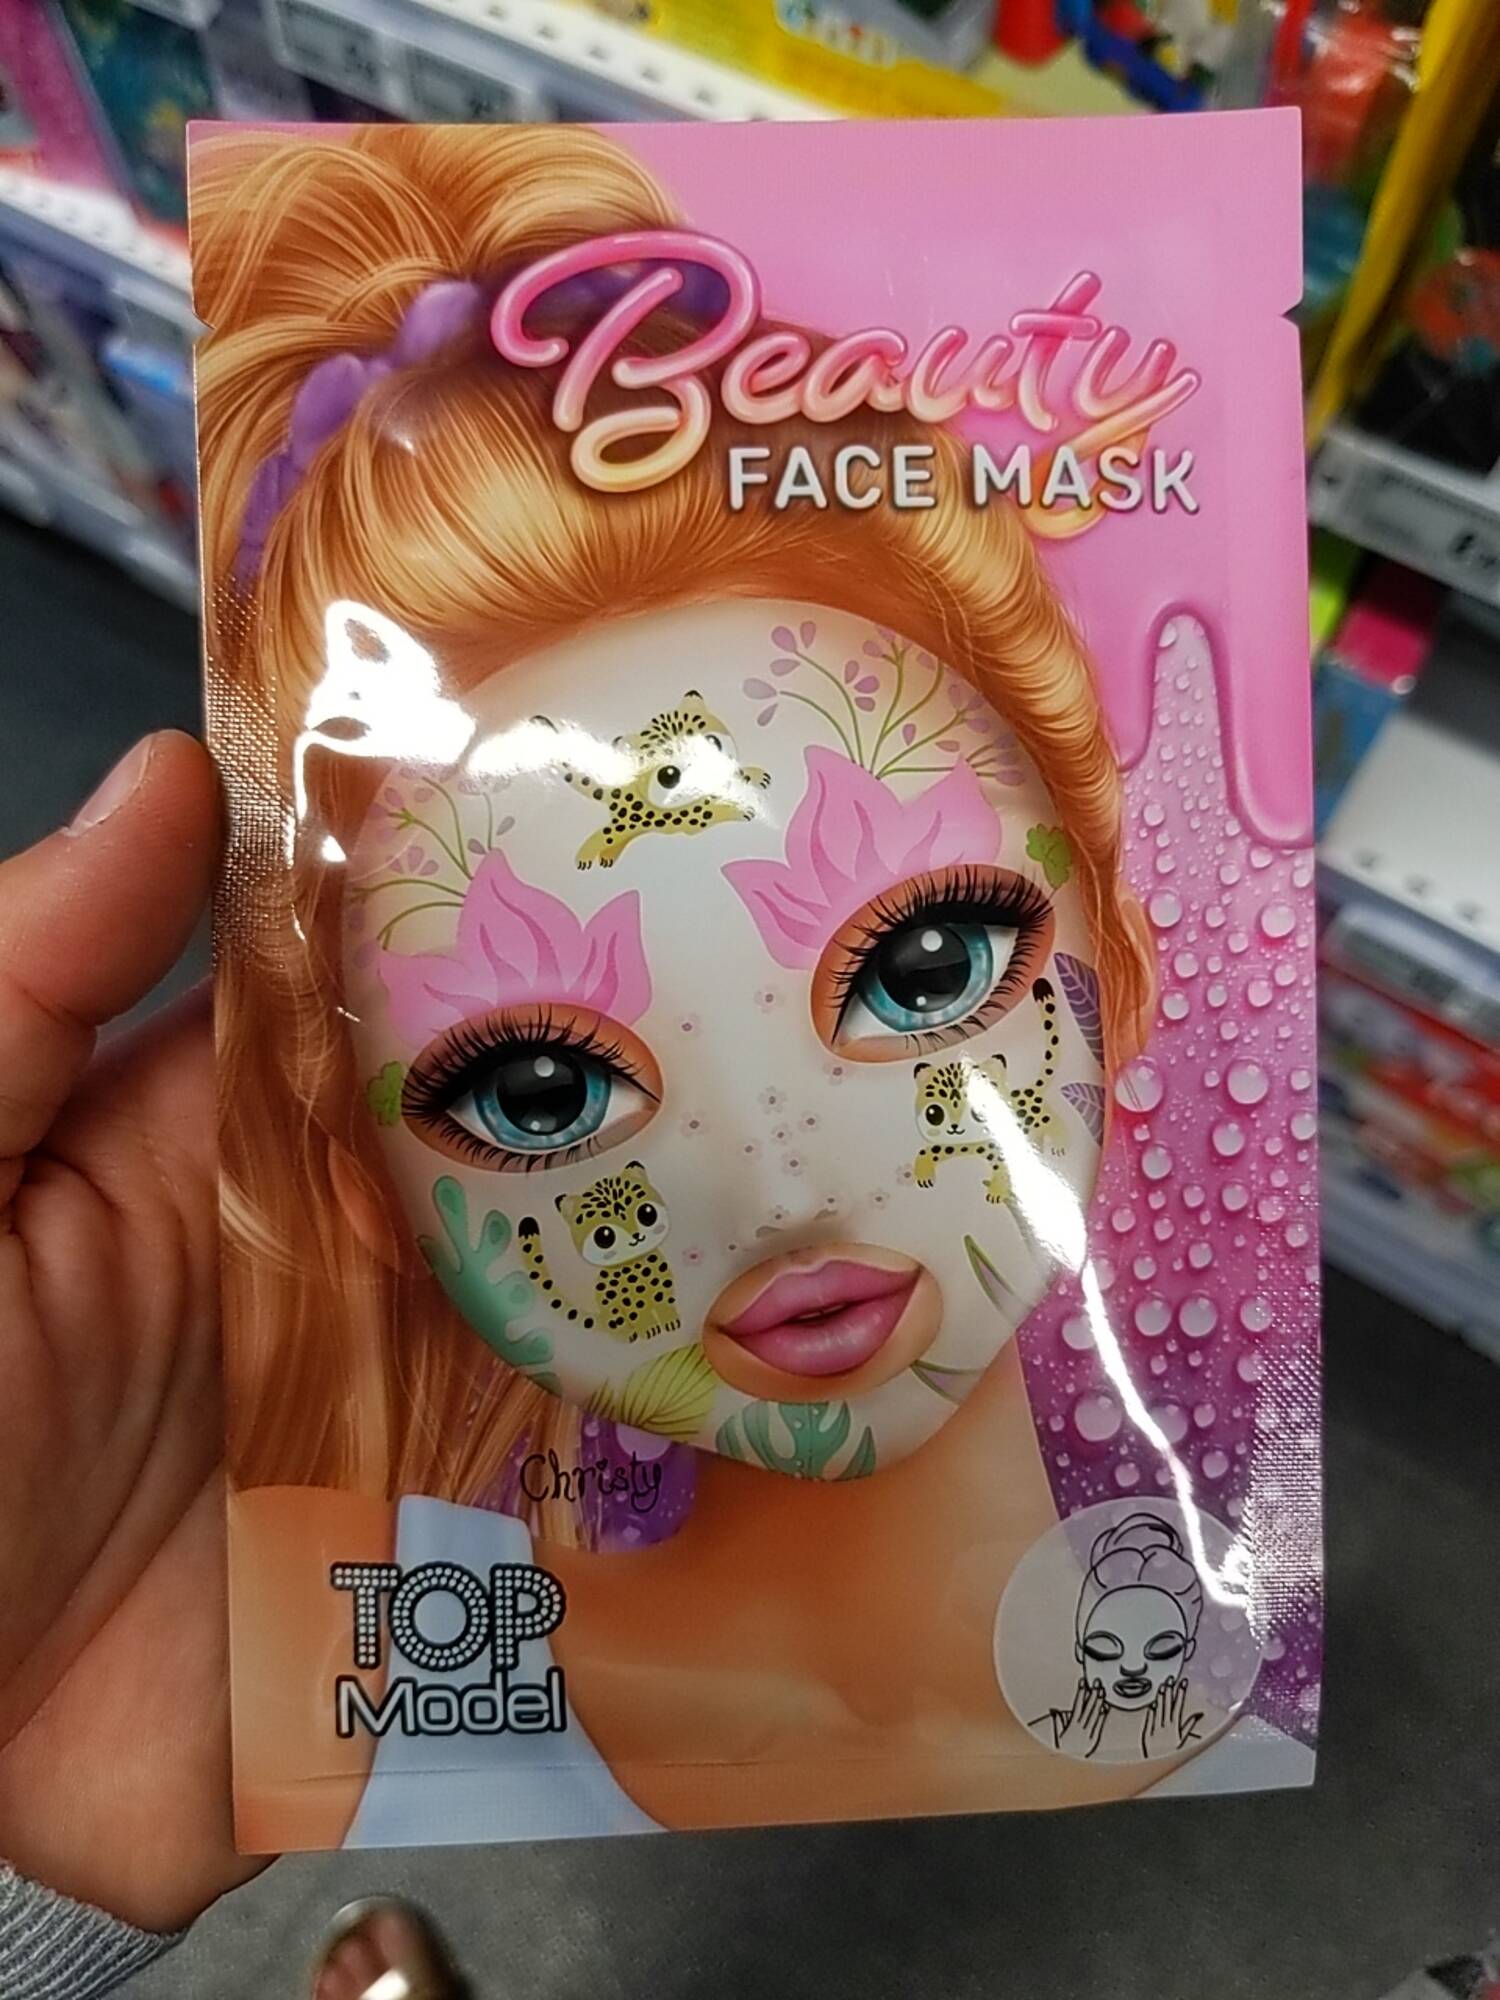 TOP MODEL - Beauty face mask